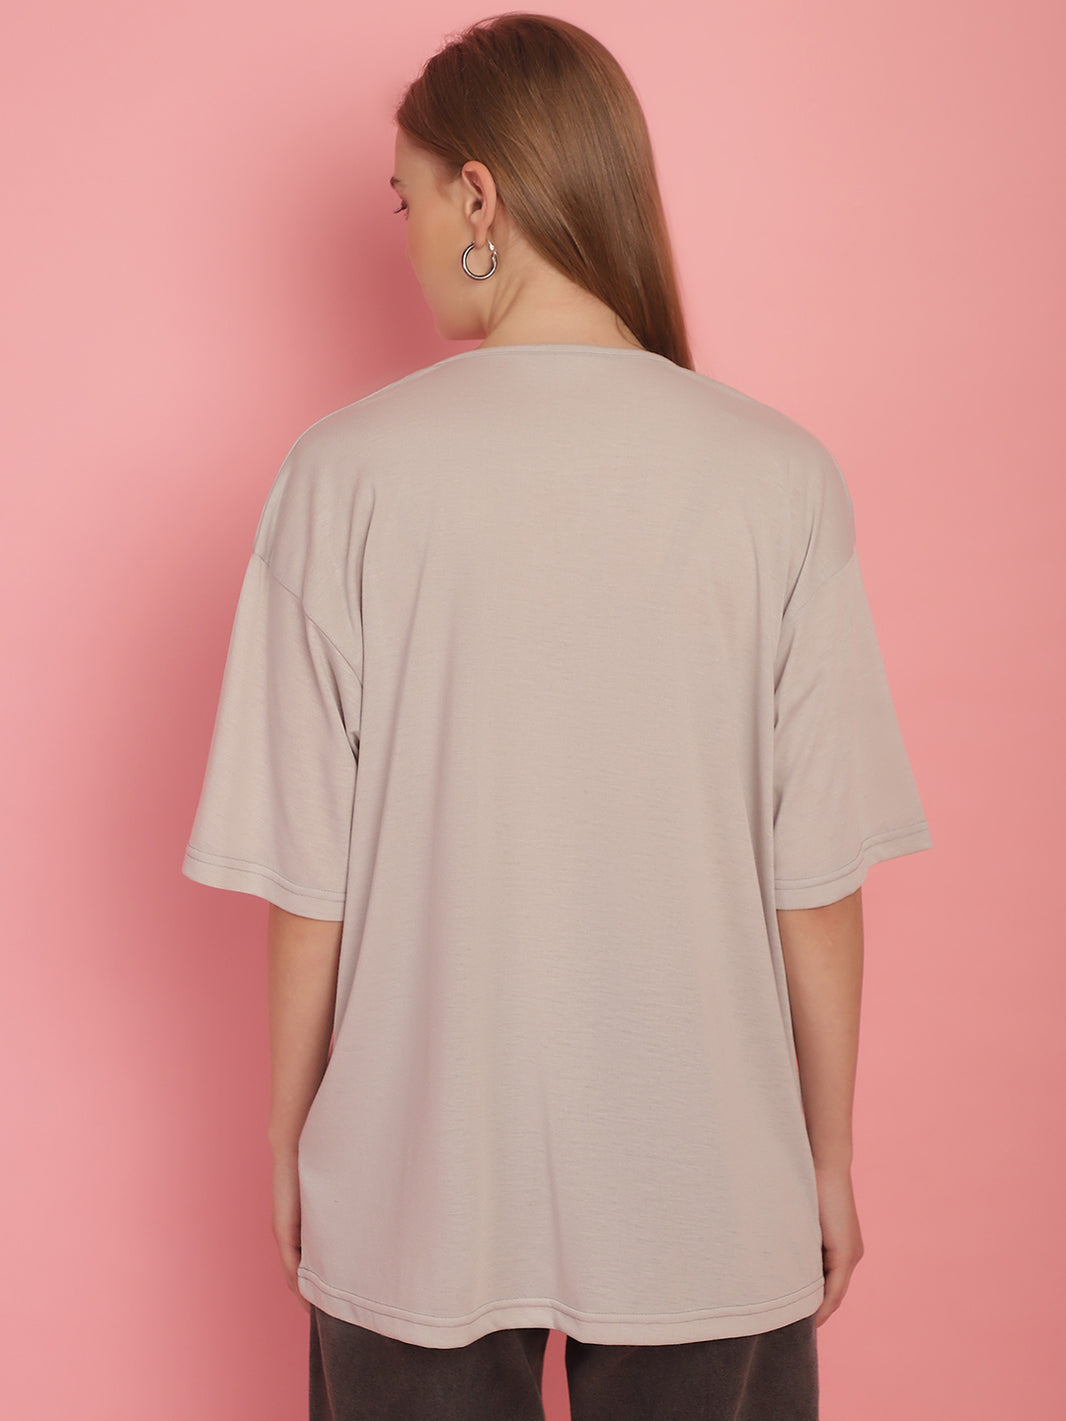 Vimal Jonney Printed Grey Round Neck Cotton Oversize Half sleeves Tshirt For Women